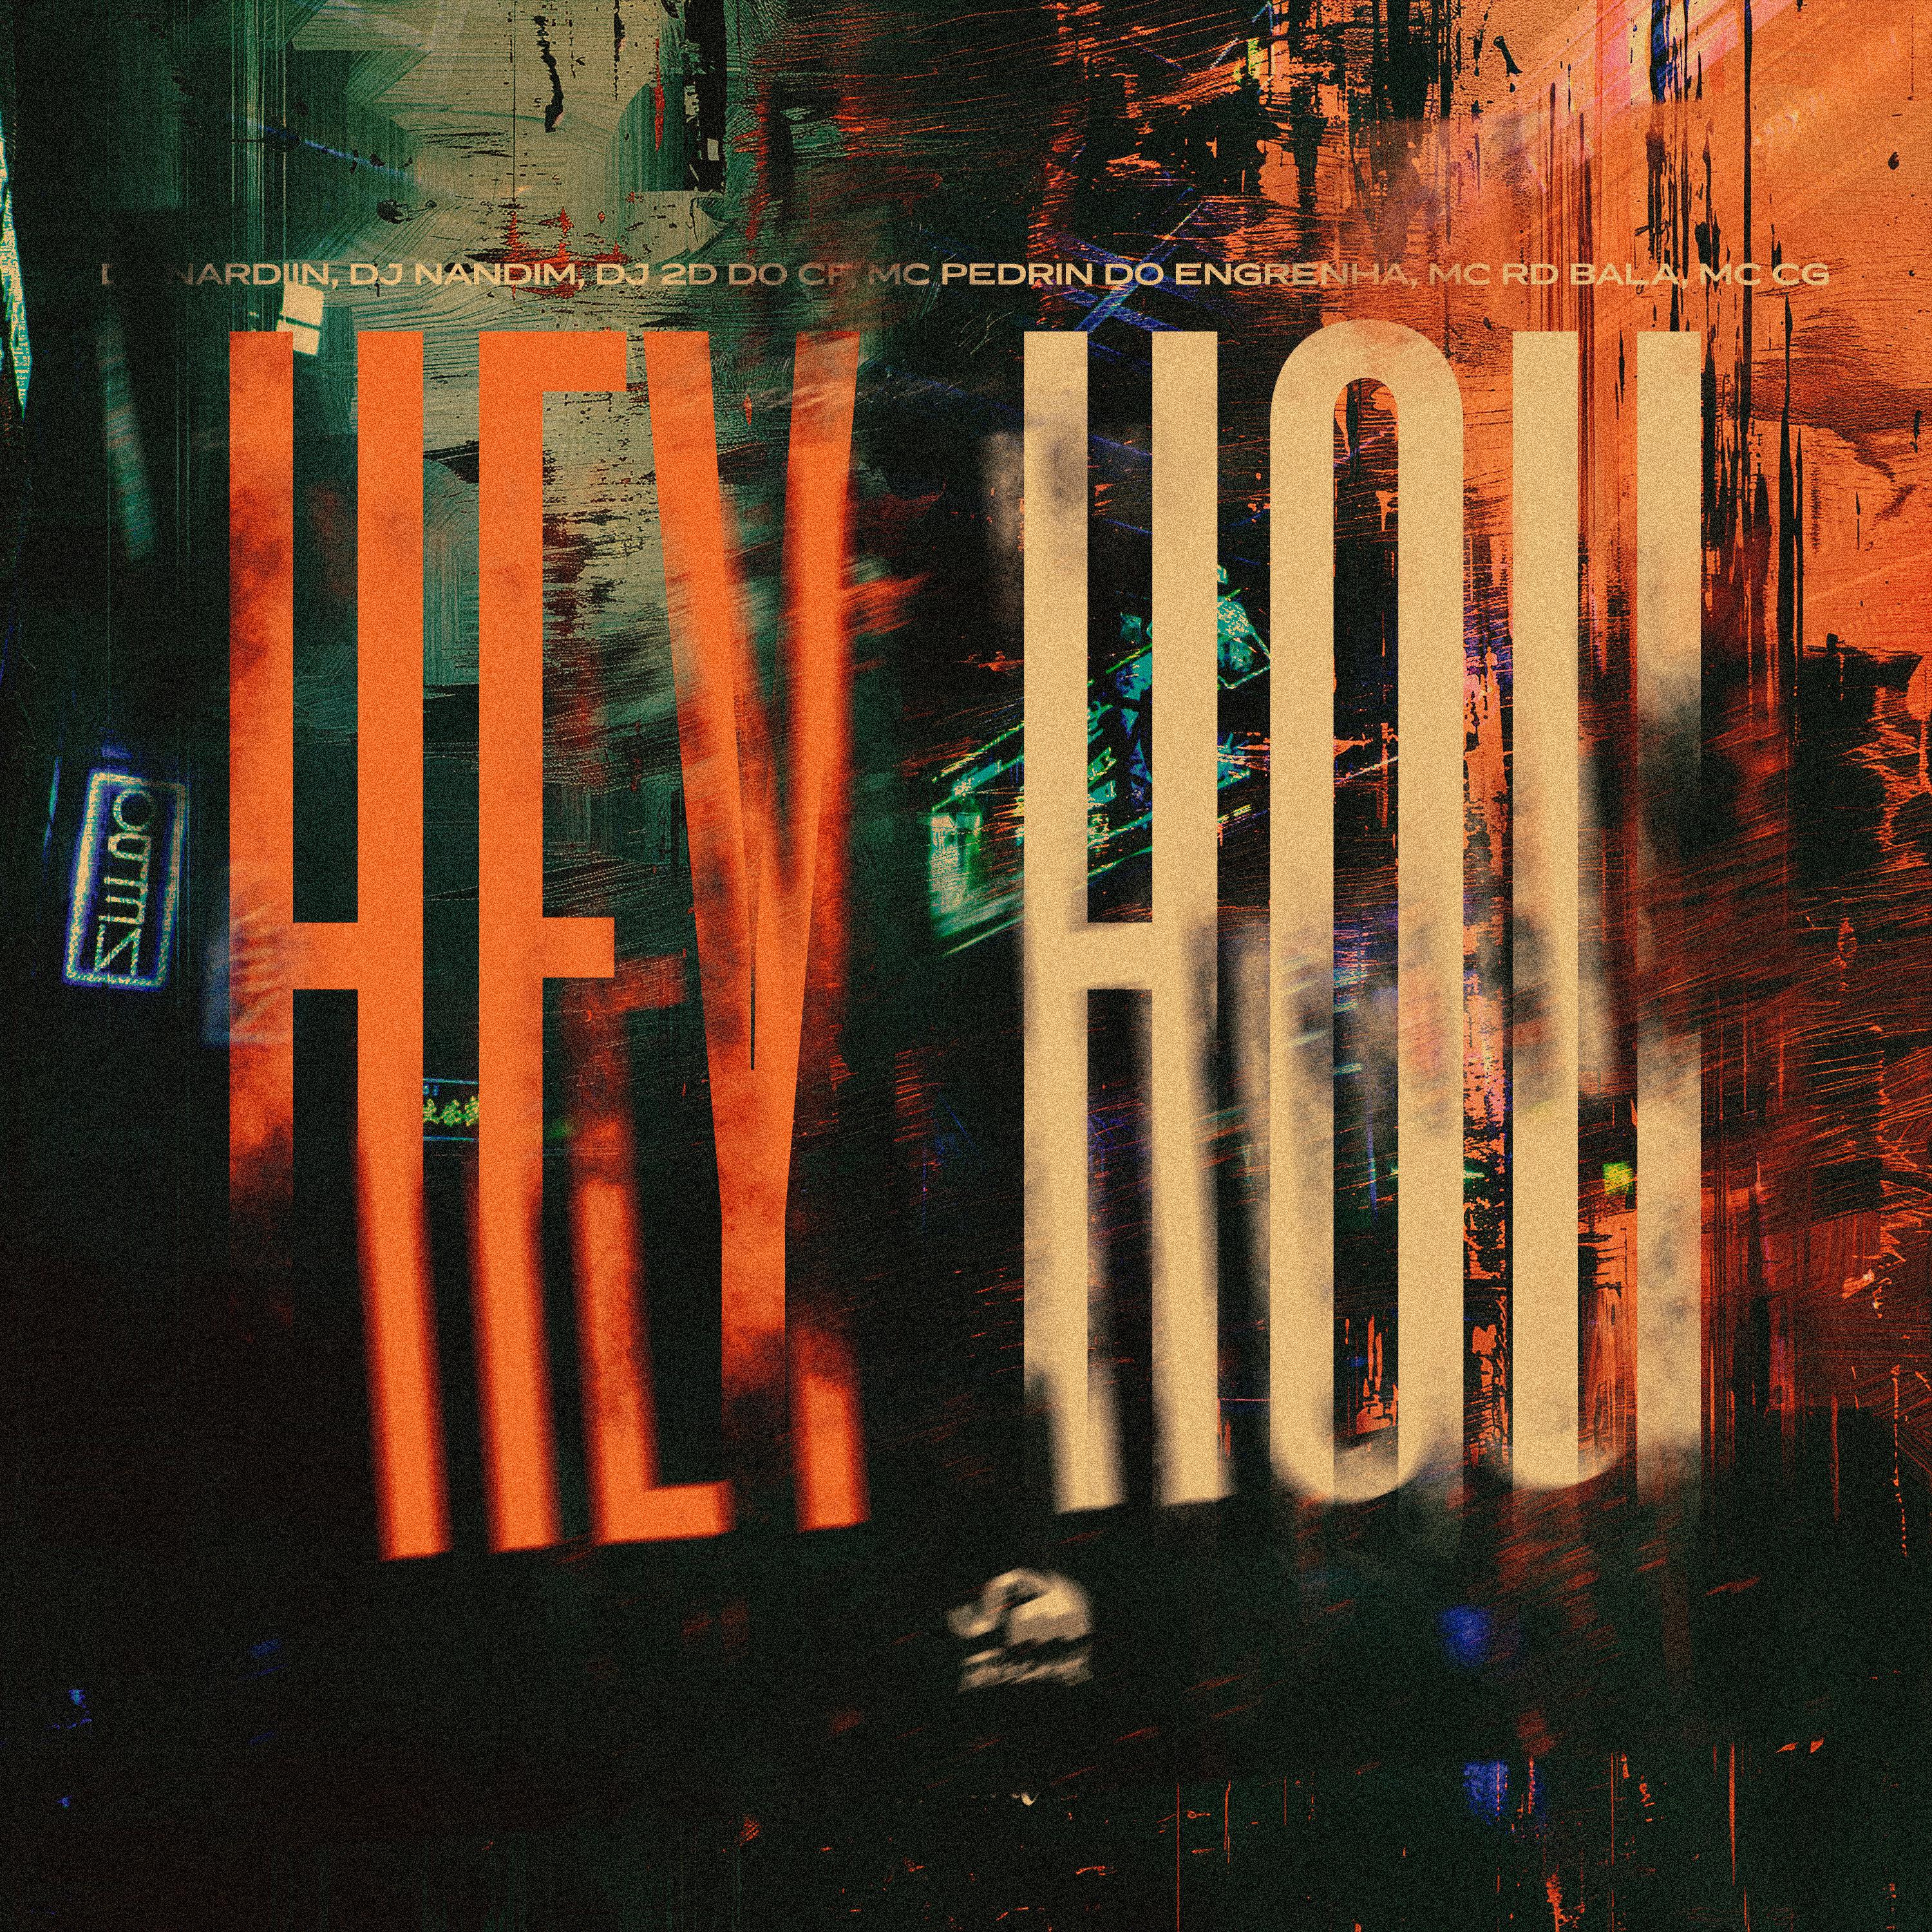 Постер альбома Hey Hou